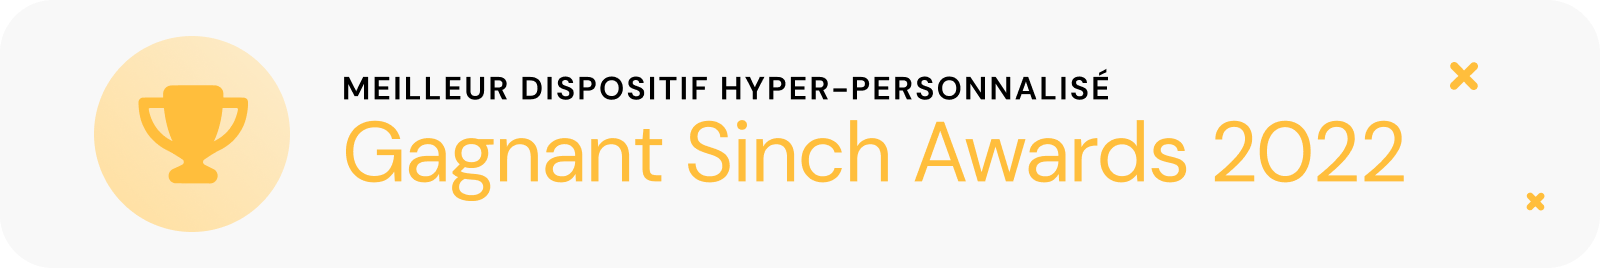 Gagnant Sinch Awards 2022 : Meilleur dispositif hyper-personnalisé